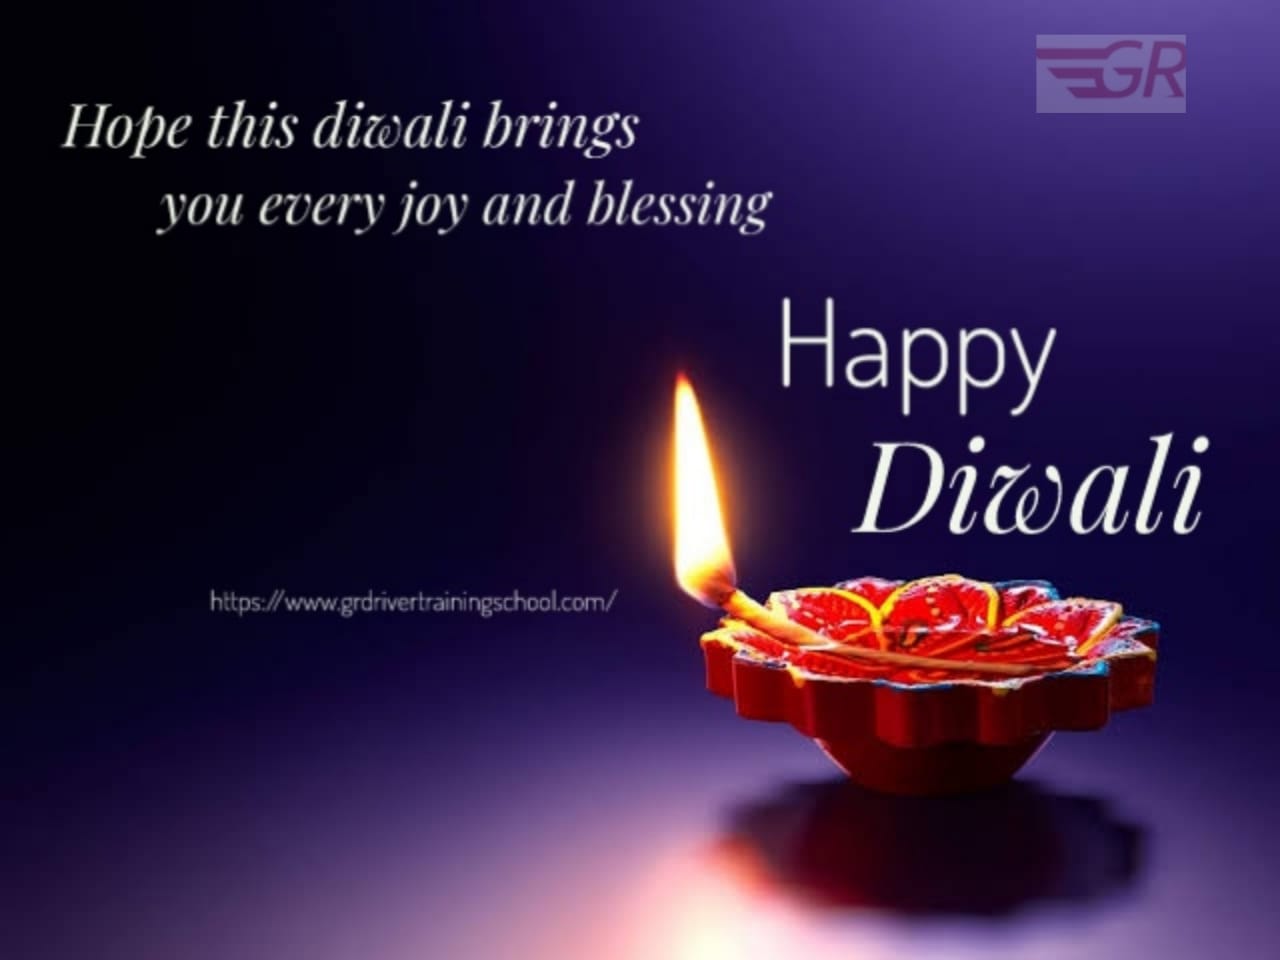 G & R Driver Training School Diwali greetings from